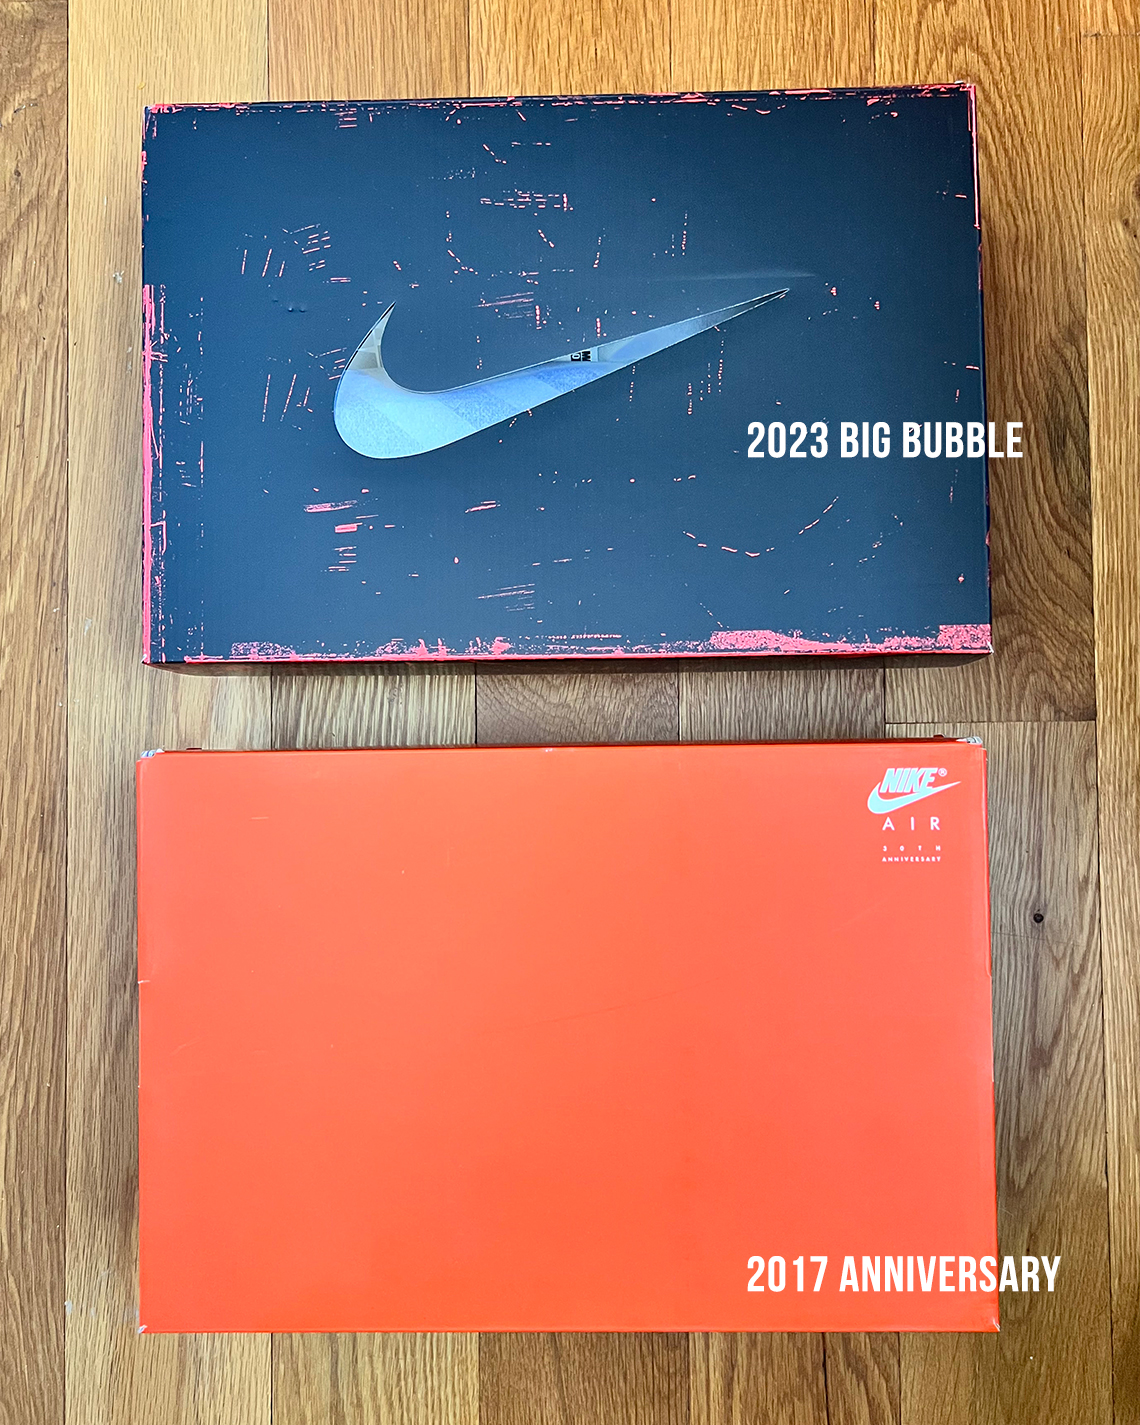 Nike nike free digital running shoe size 2017 Vs 2023 Box